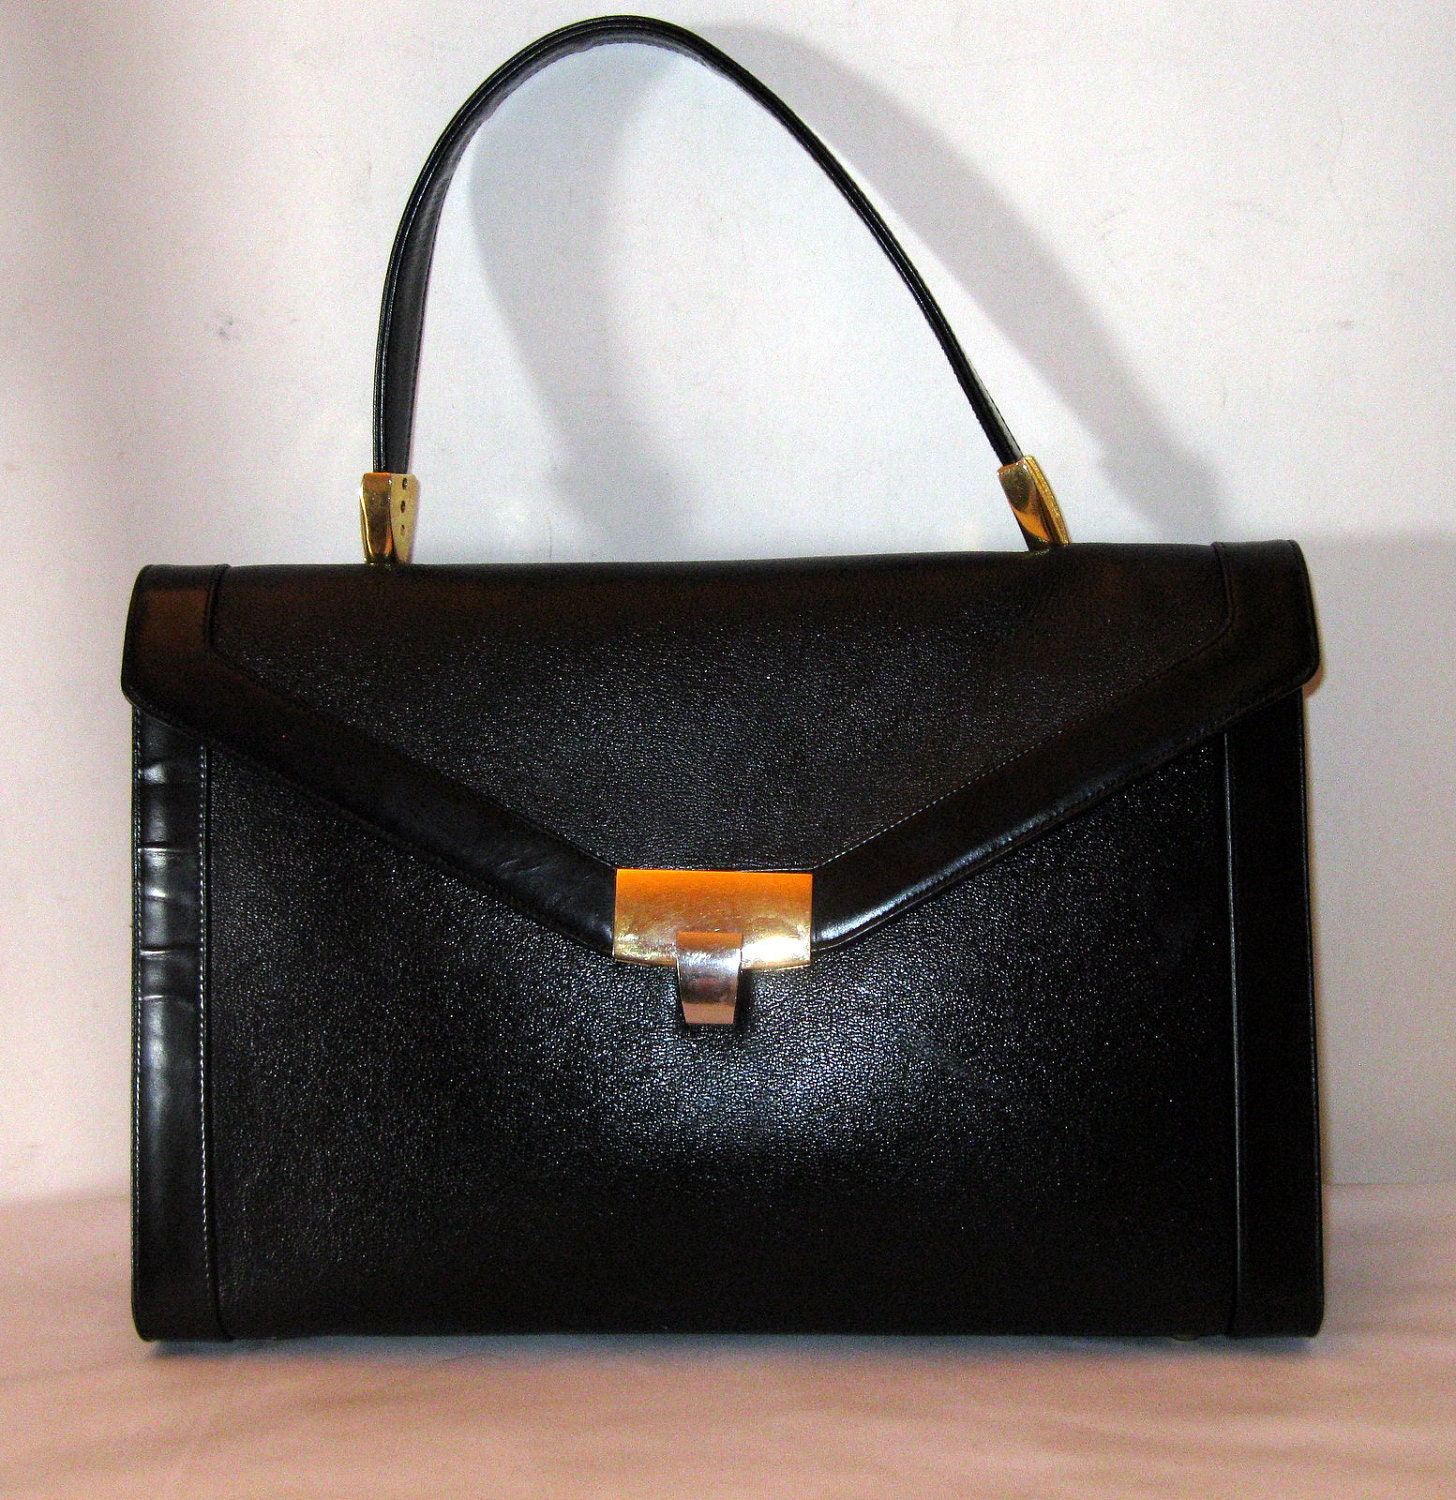 Koret gen leather evening bag handbag purse gorgeous vintage